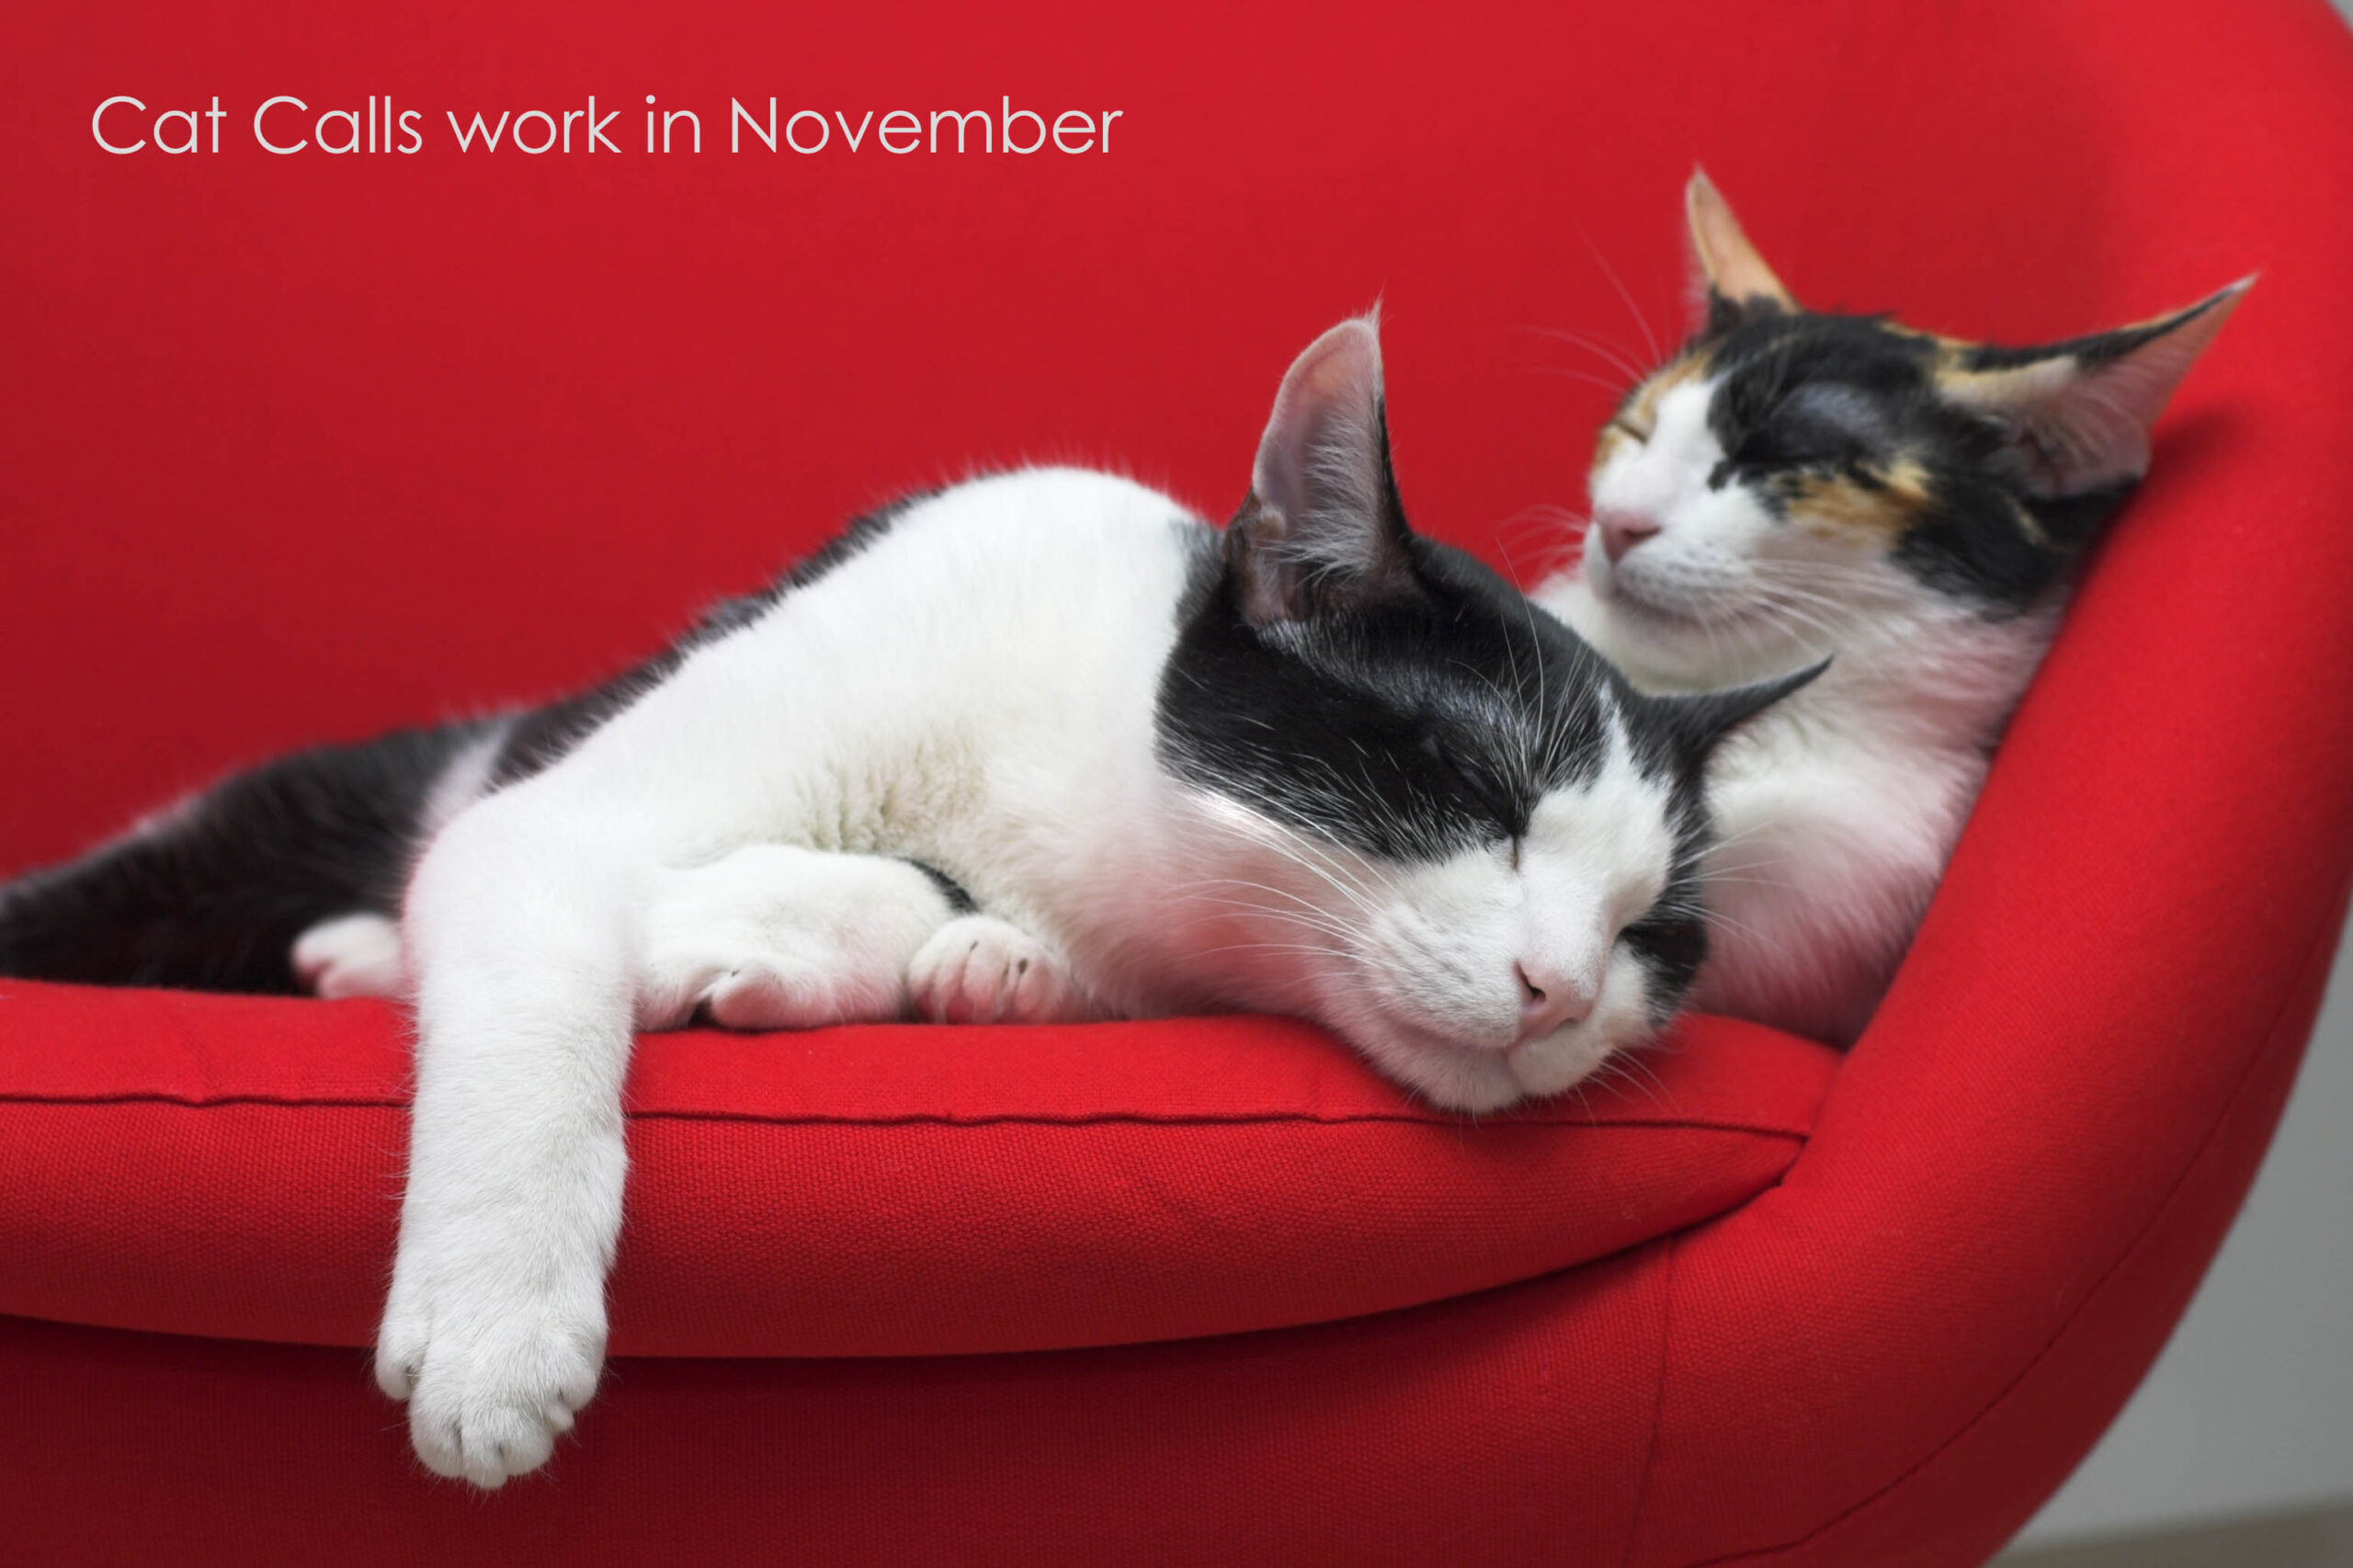 Cat CAll Charity's work in November